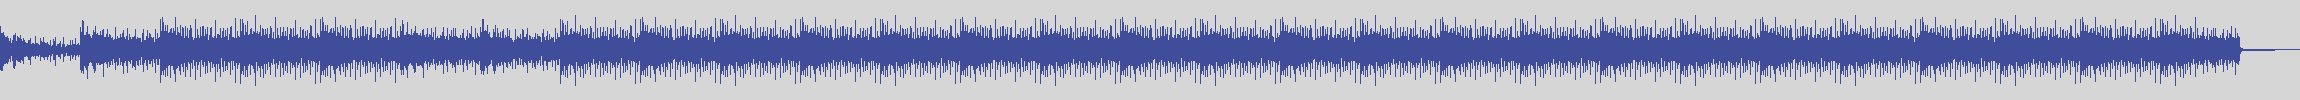 nf_boyz_records [NFY048] Plattform 8 - Point of Breack [Deep Mix] audio wave form